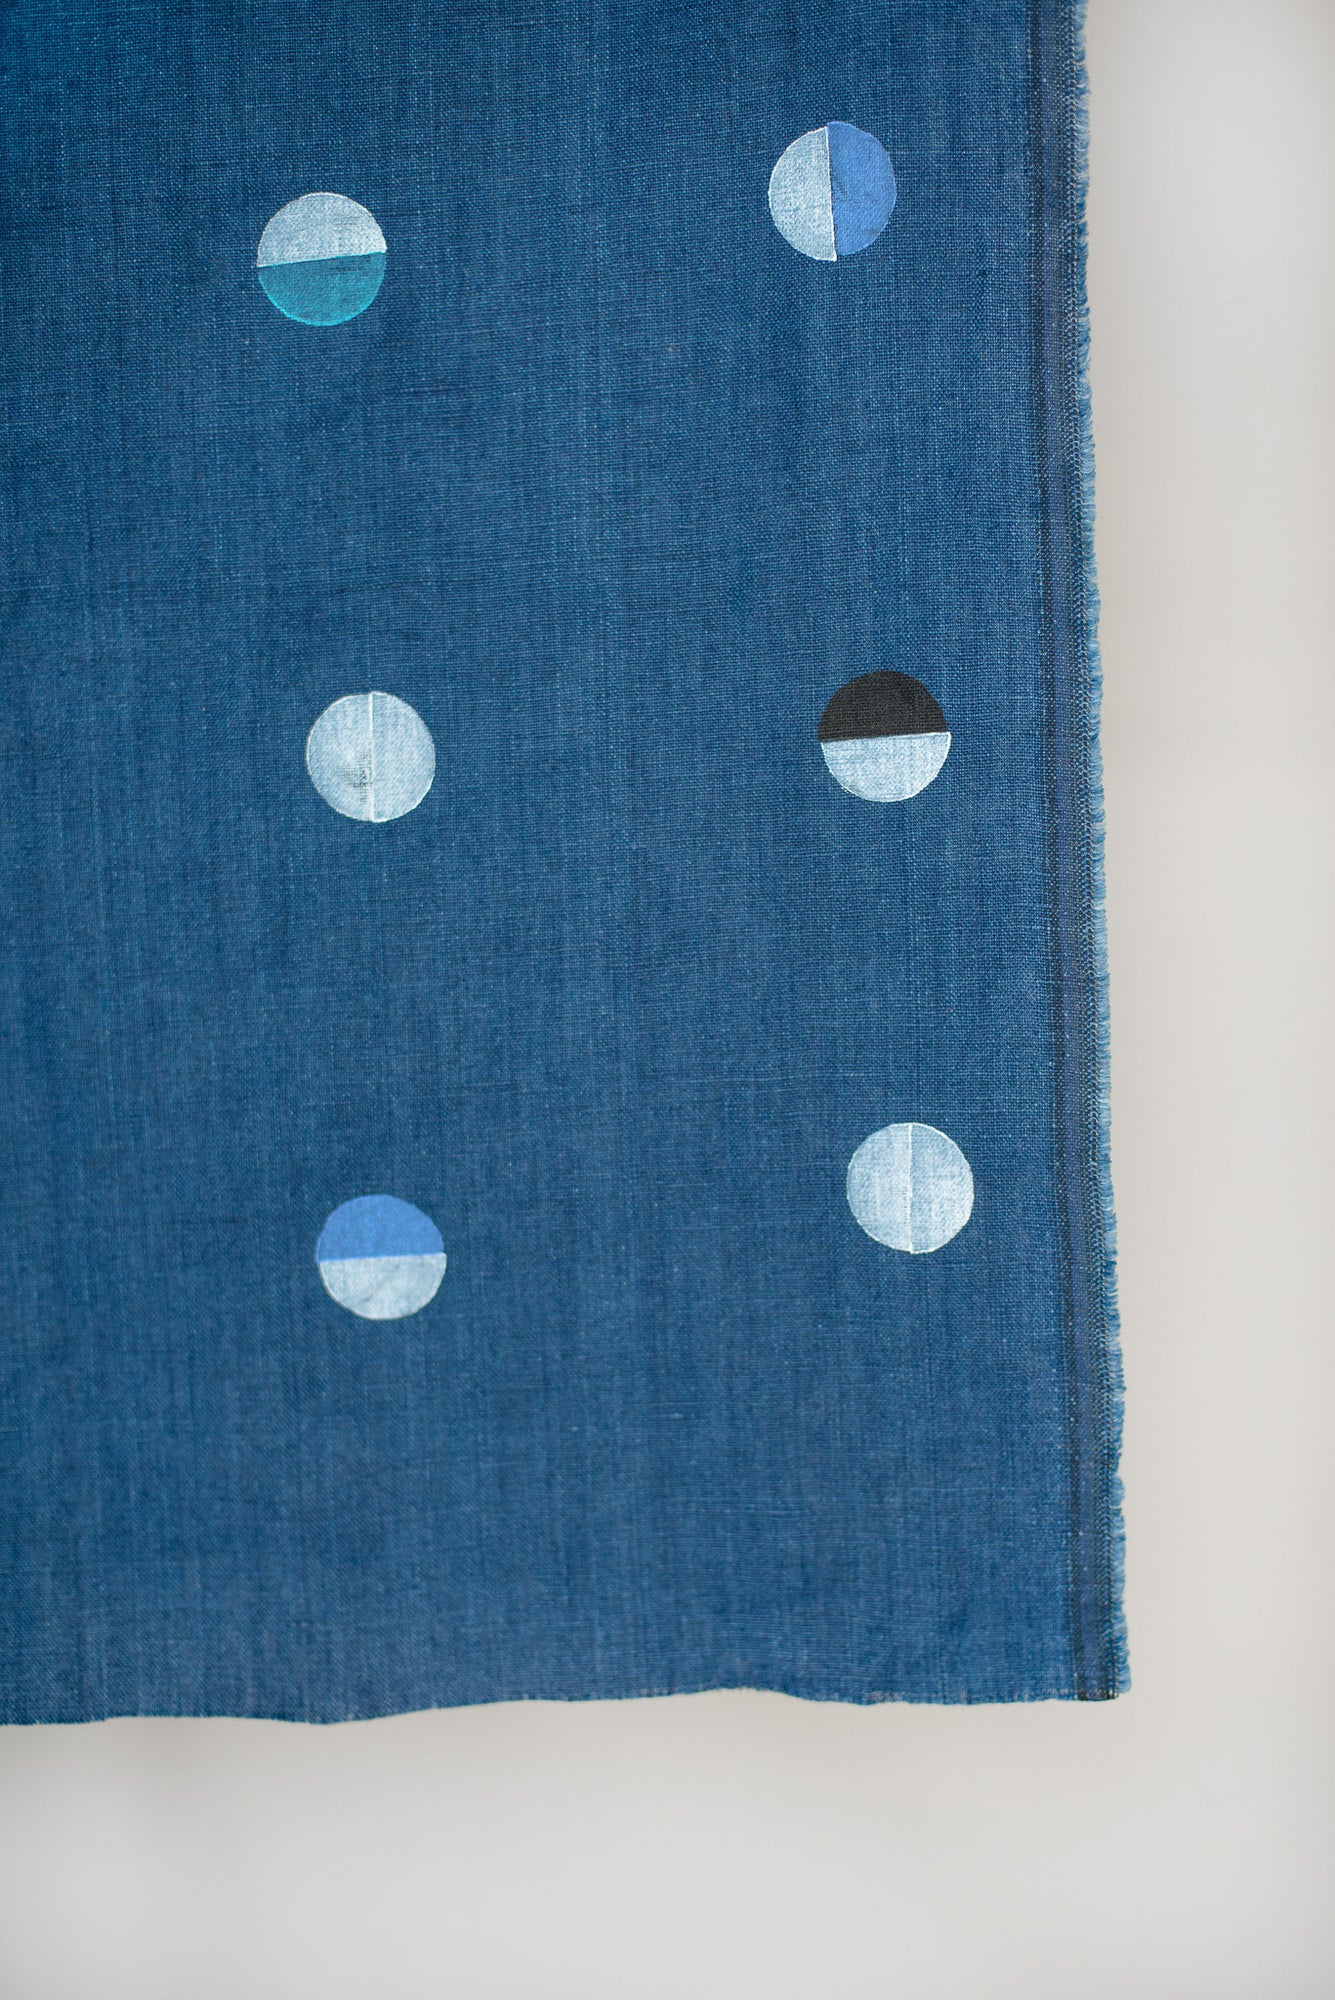 Indigo Moons - Fabric By The Yard